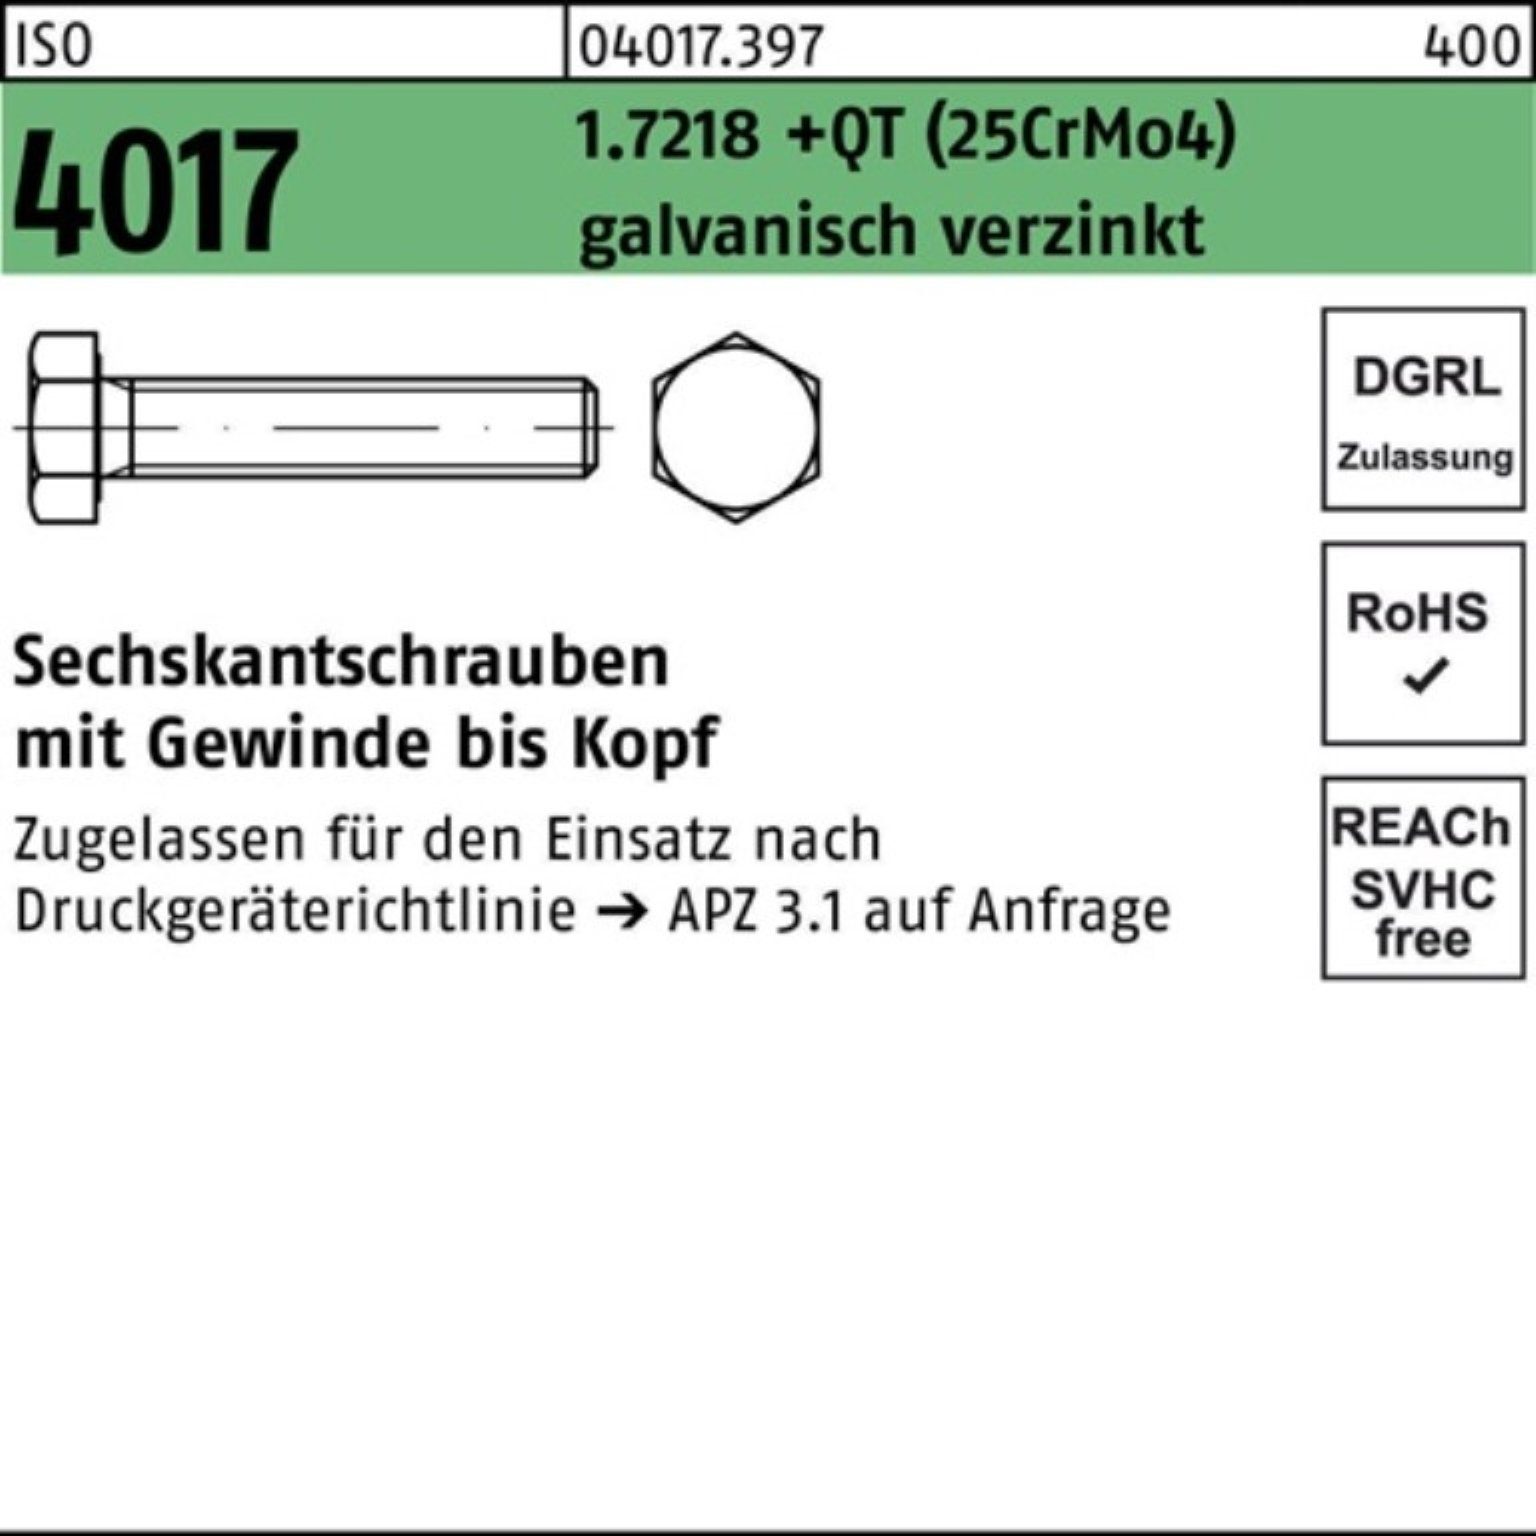 Bufab Sechskantschraube 100er M16x30 g Sechskantschraube 1.7218 ISO 4017 (25CrMo4) VG +QT Pack